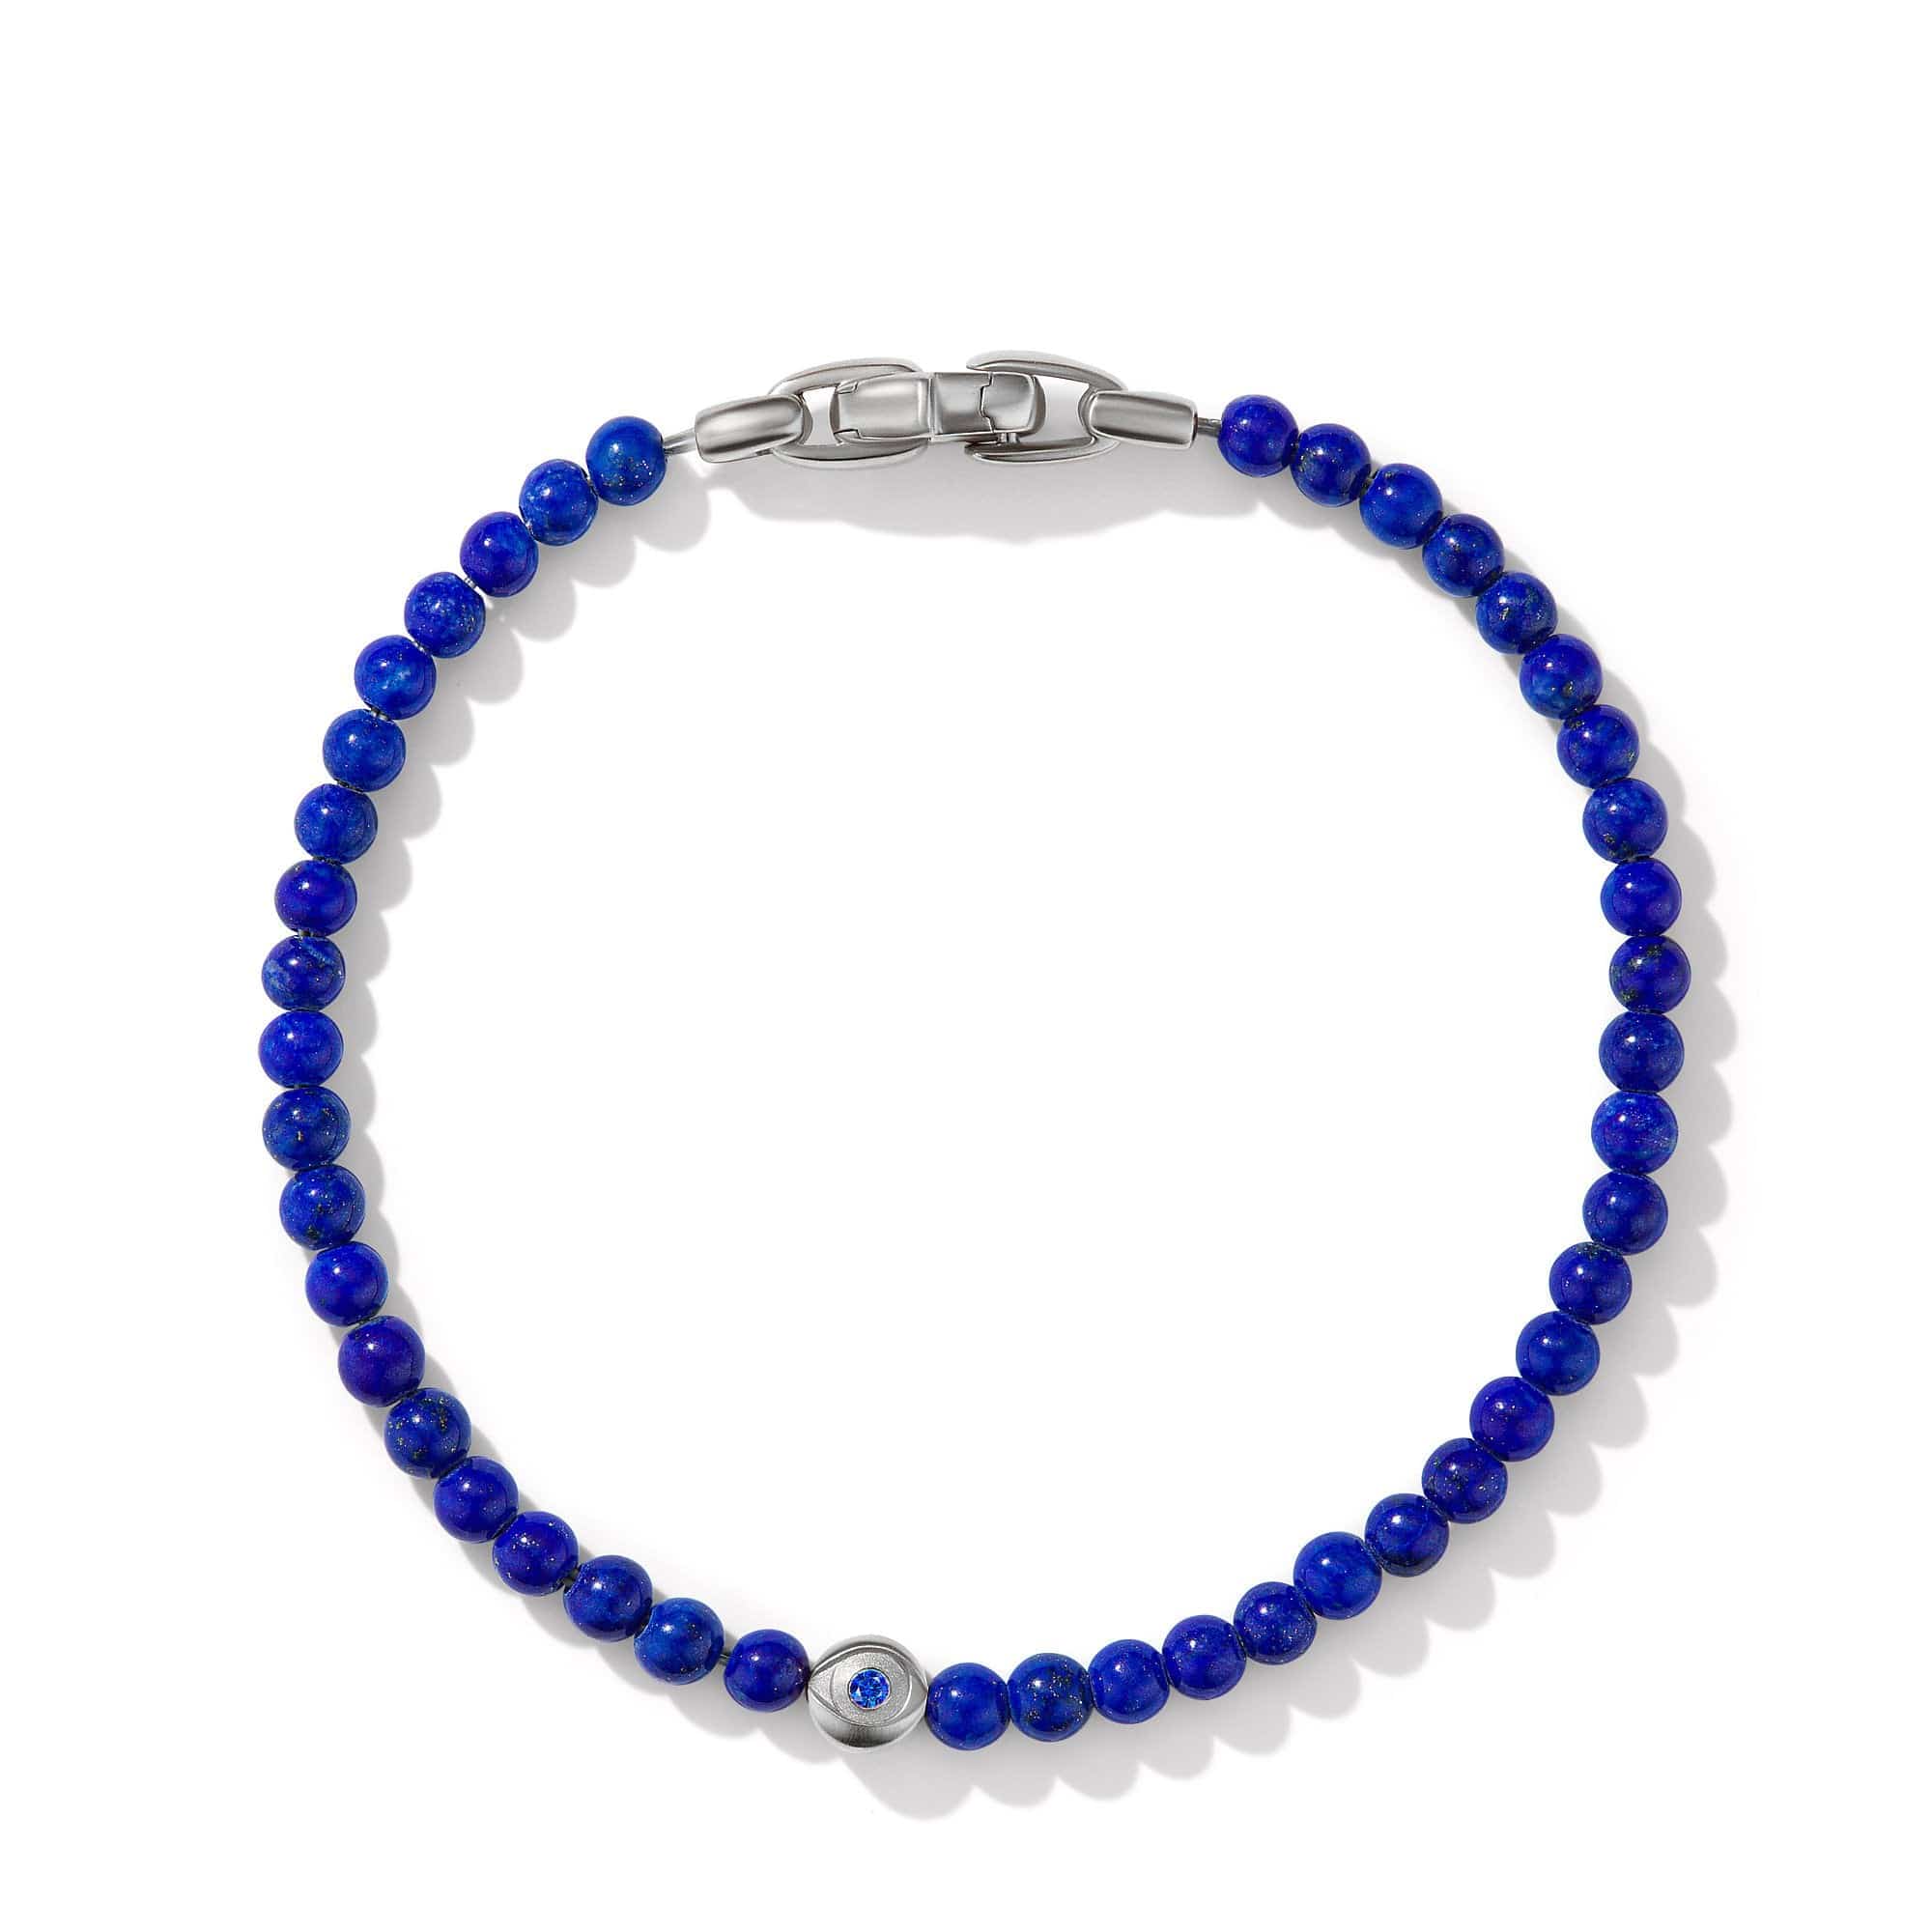 Spiritual Beads Evil Eye Bracelet with Lapis and Sapphire